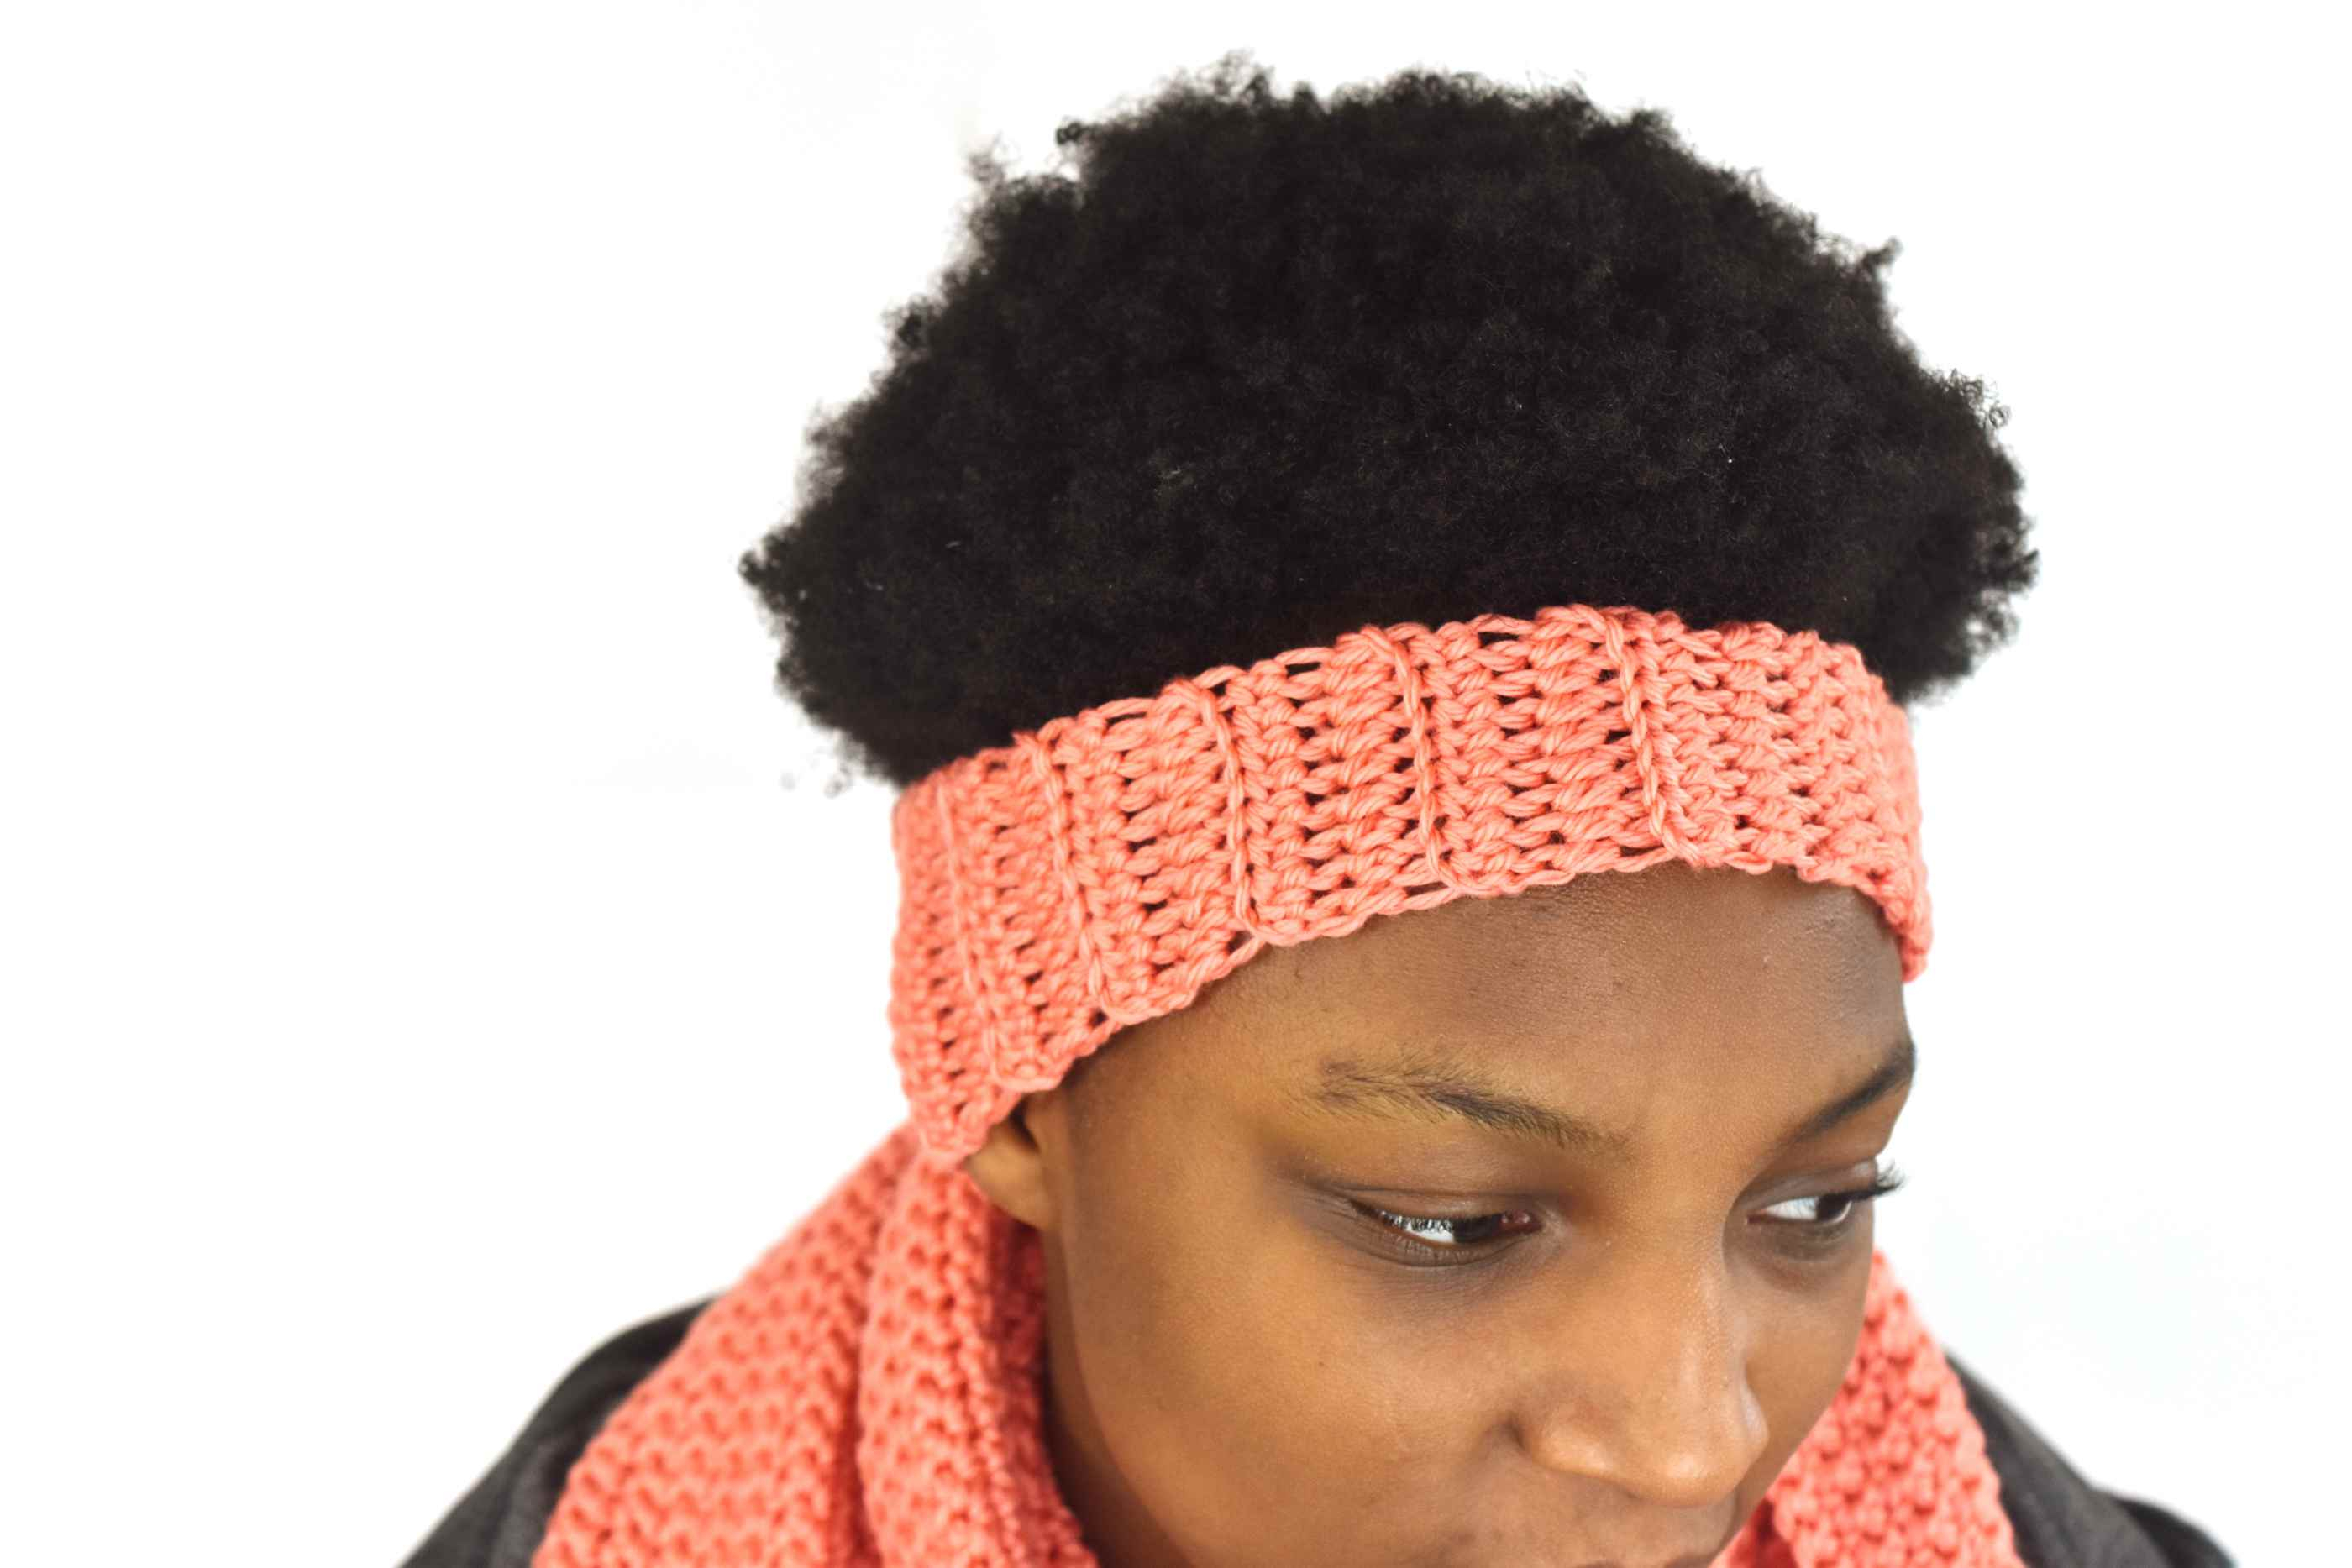 Crochet Headband With Flower Pattern 12 Free Patterns For Crochet Headbands